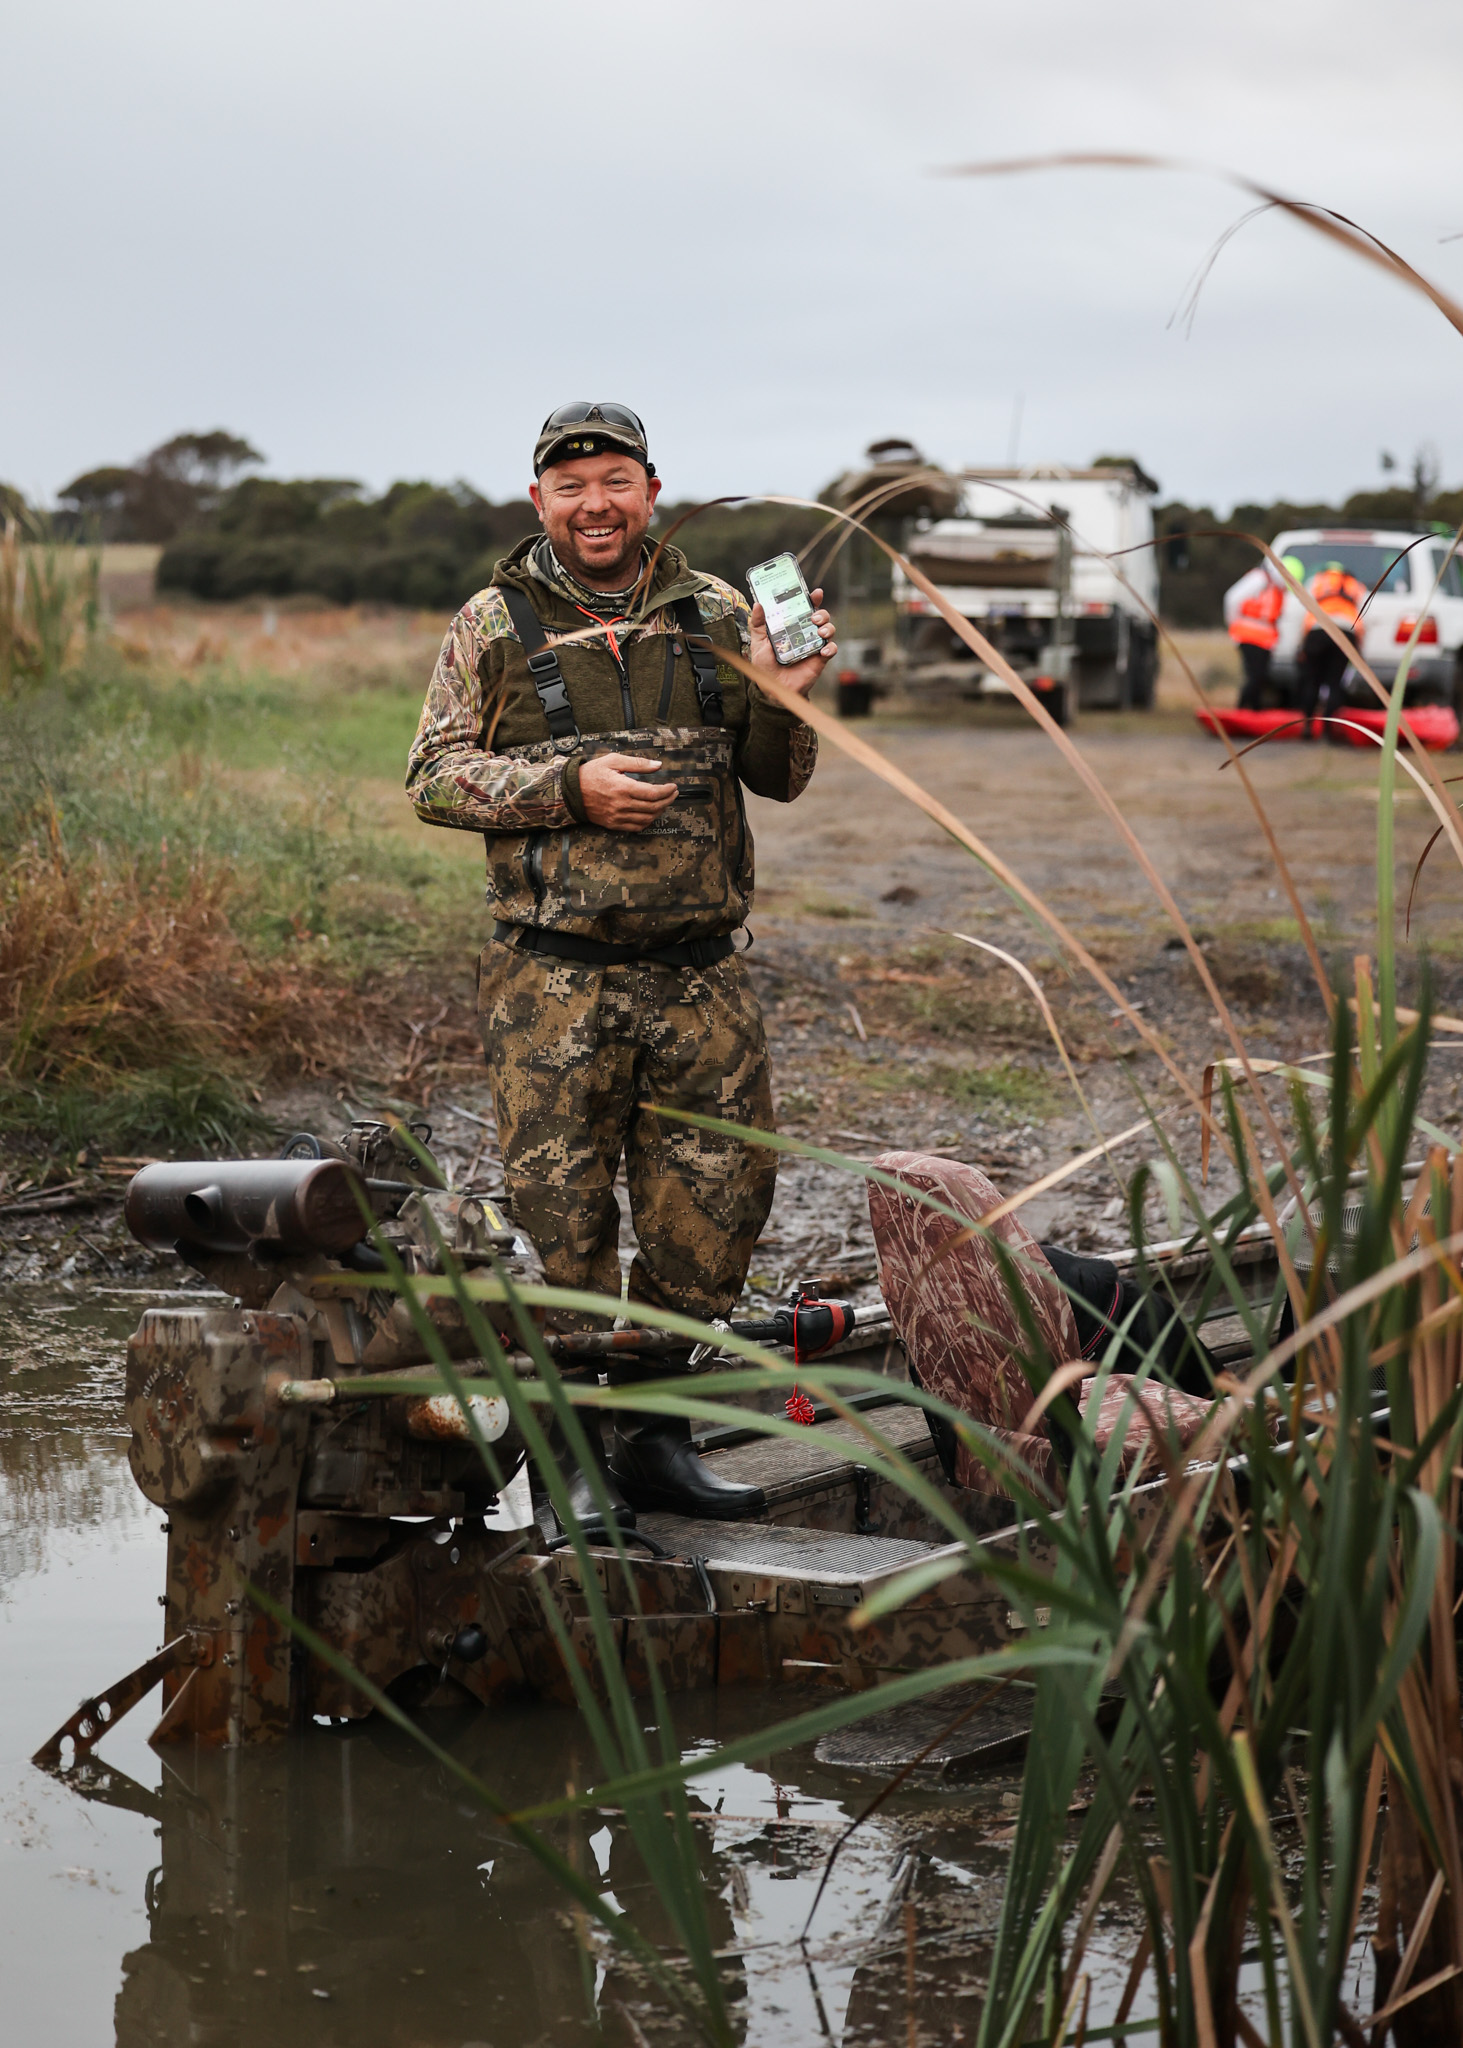 Trent Leen an Australian duck hunter laughs at the boat ramp.